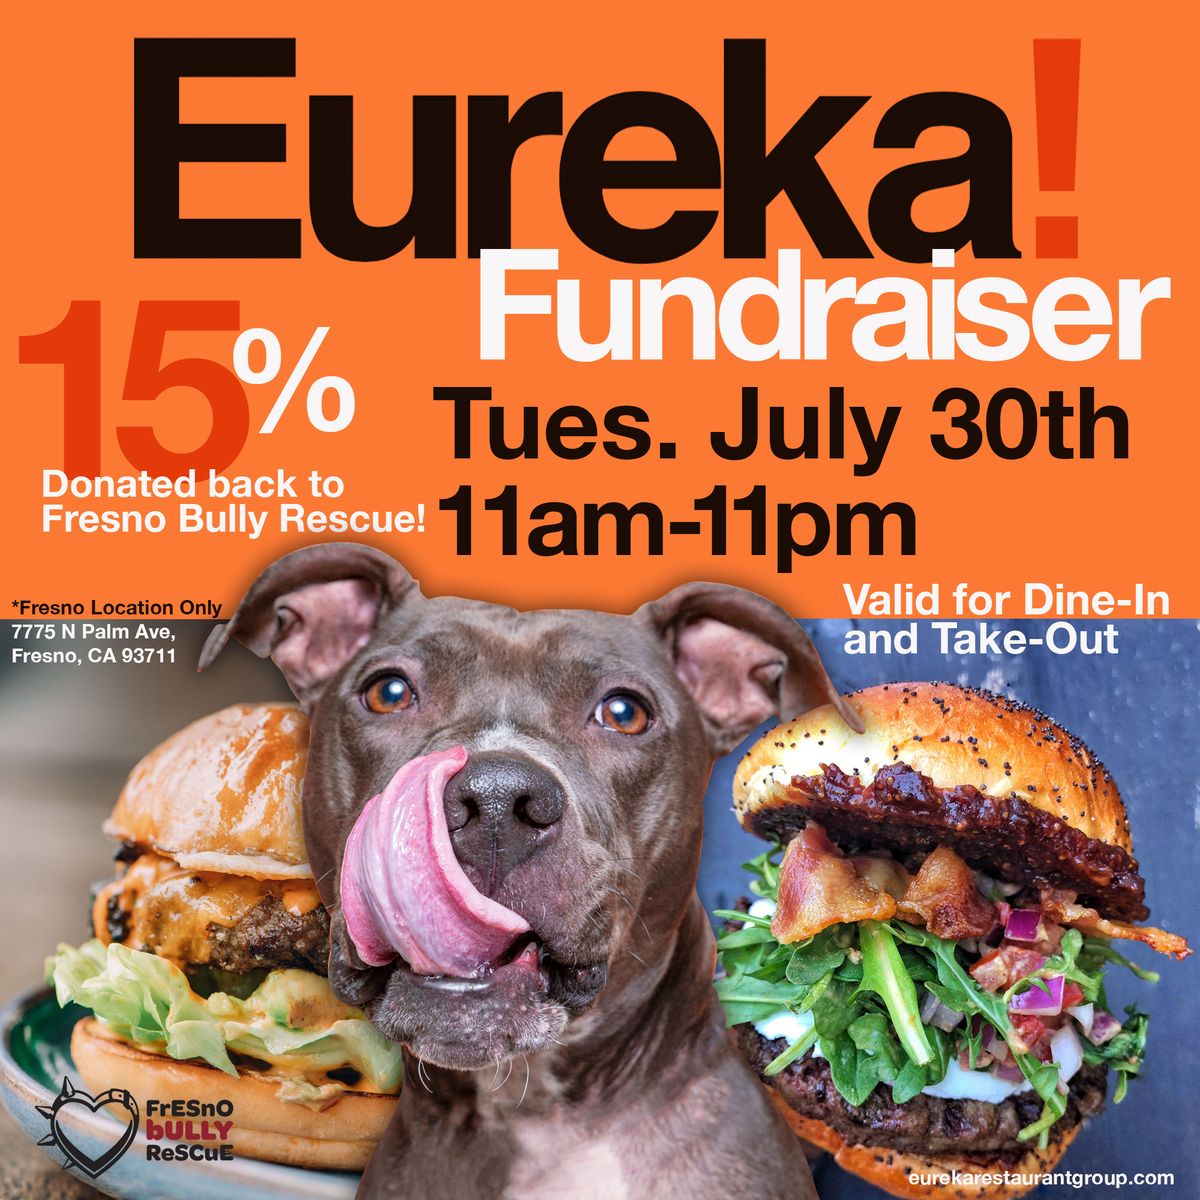 Eureka! Burger Fundraiser for Fresno Bully Rescue